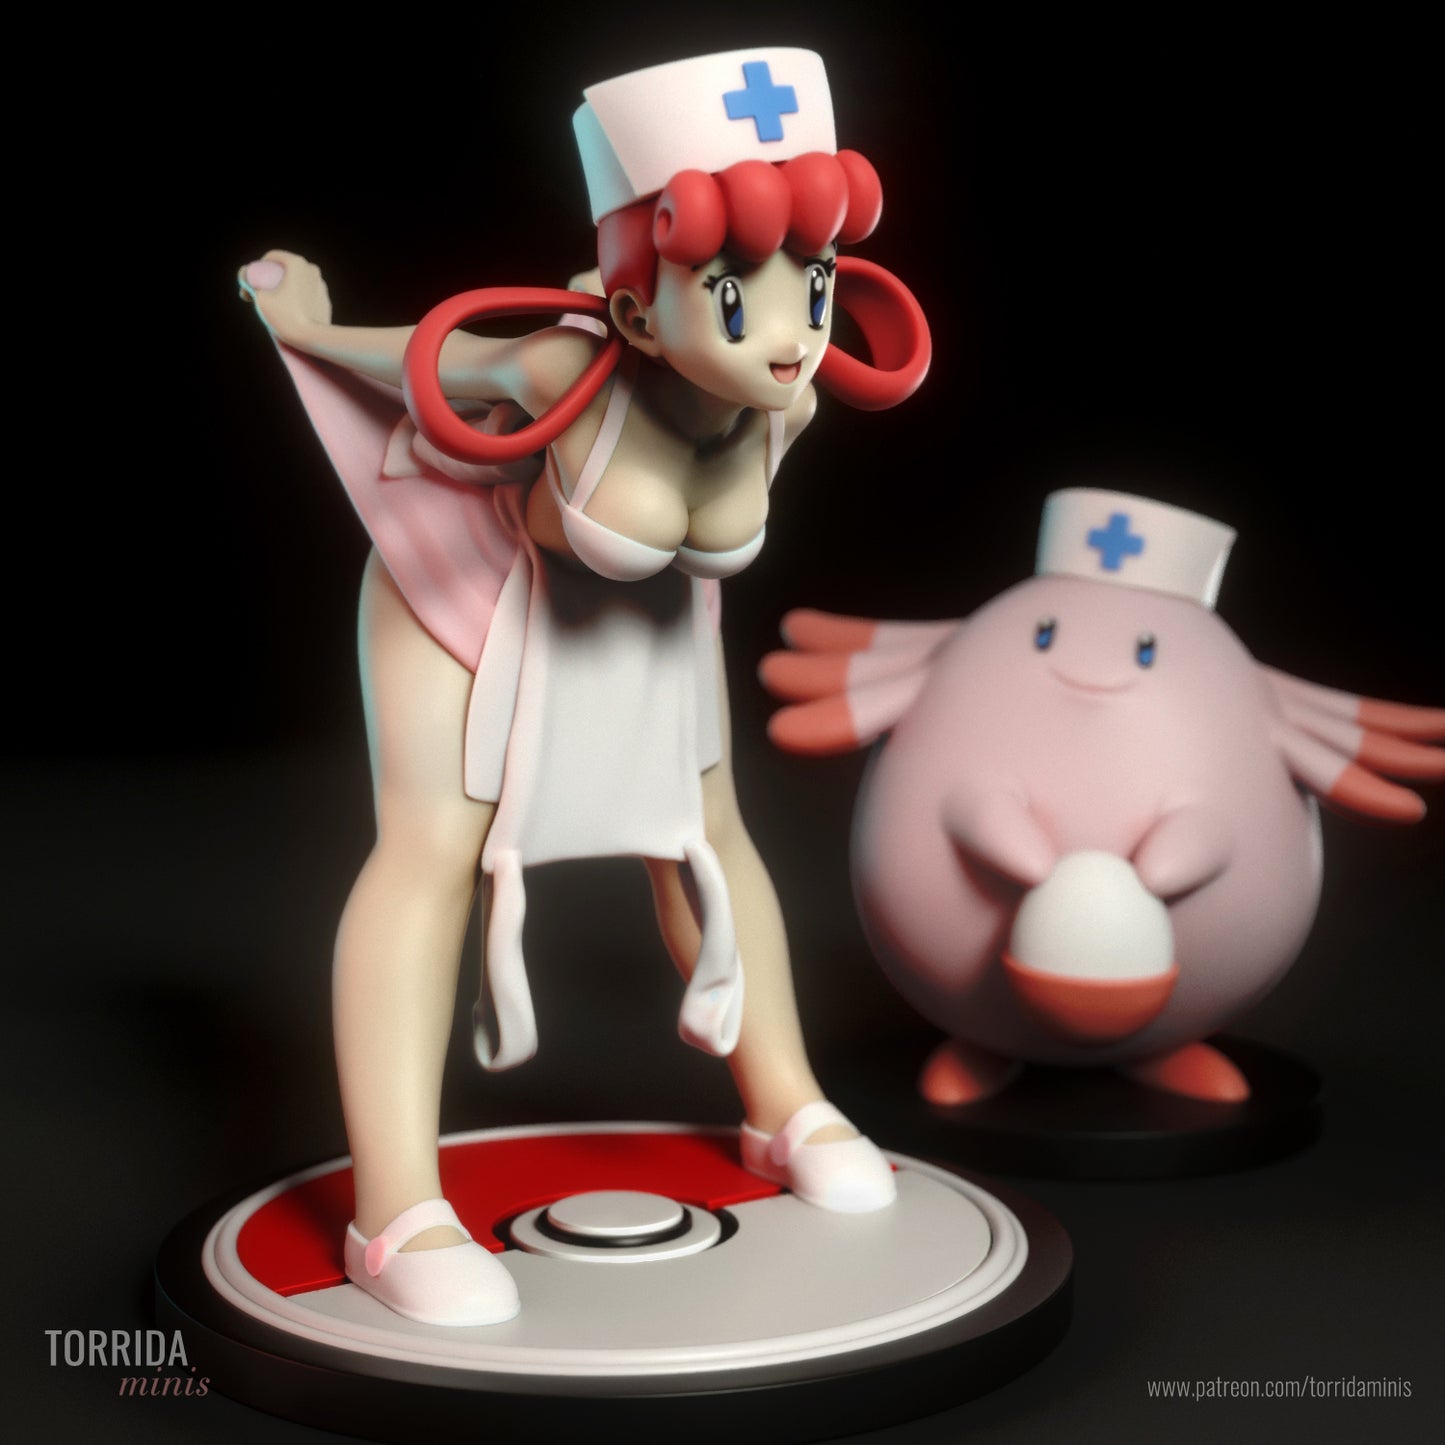 Fanart Trainer Nurse Pinup Figurine